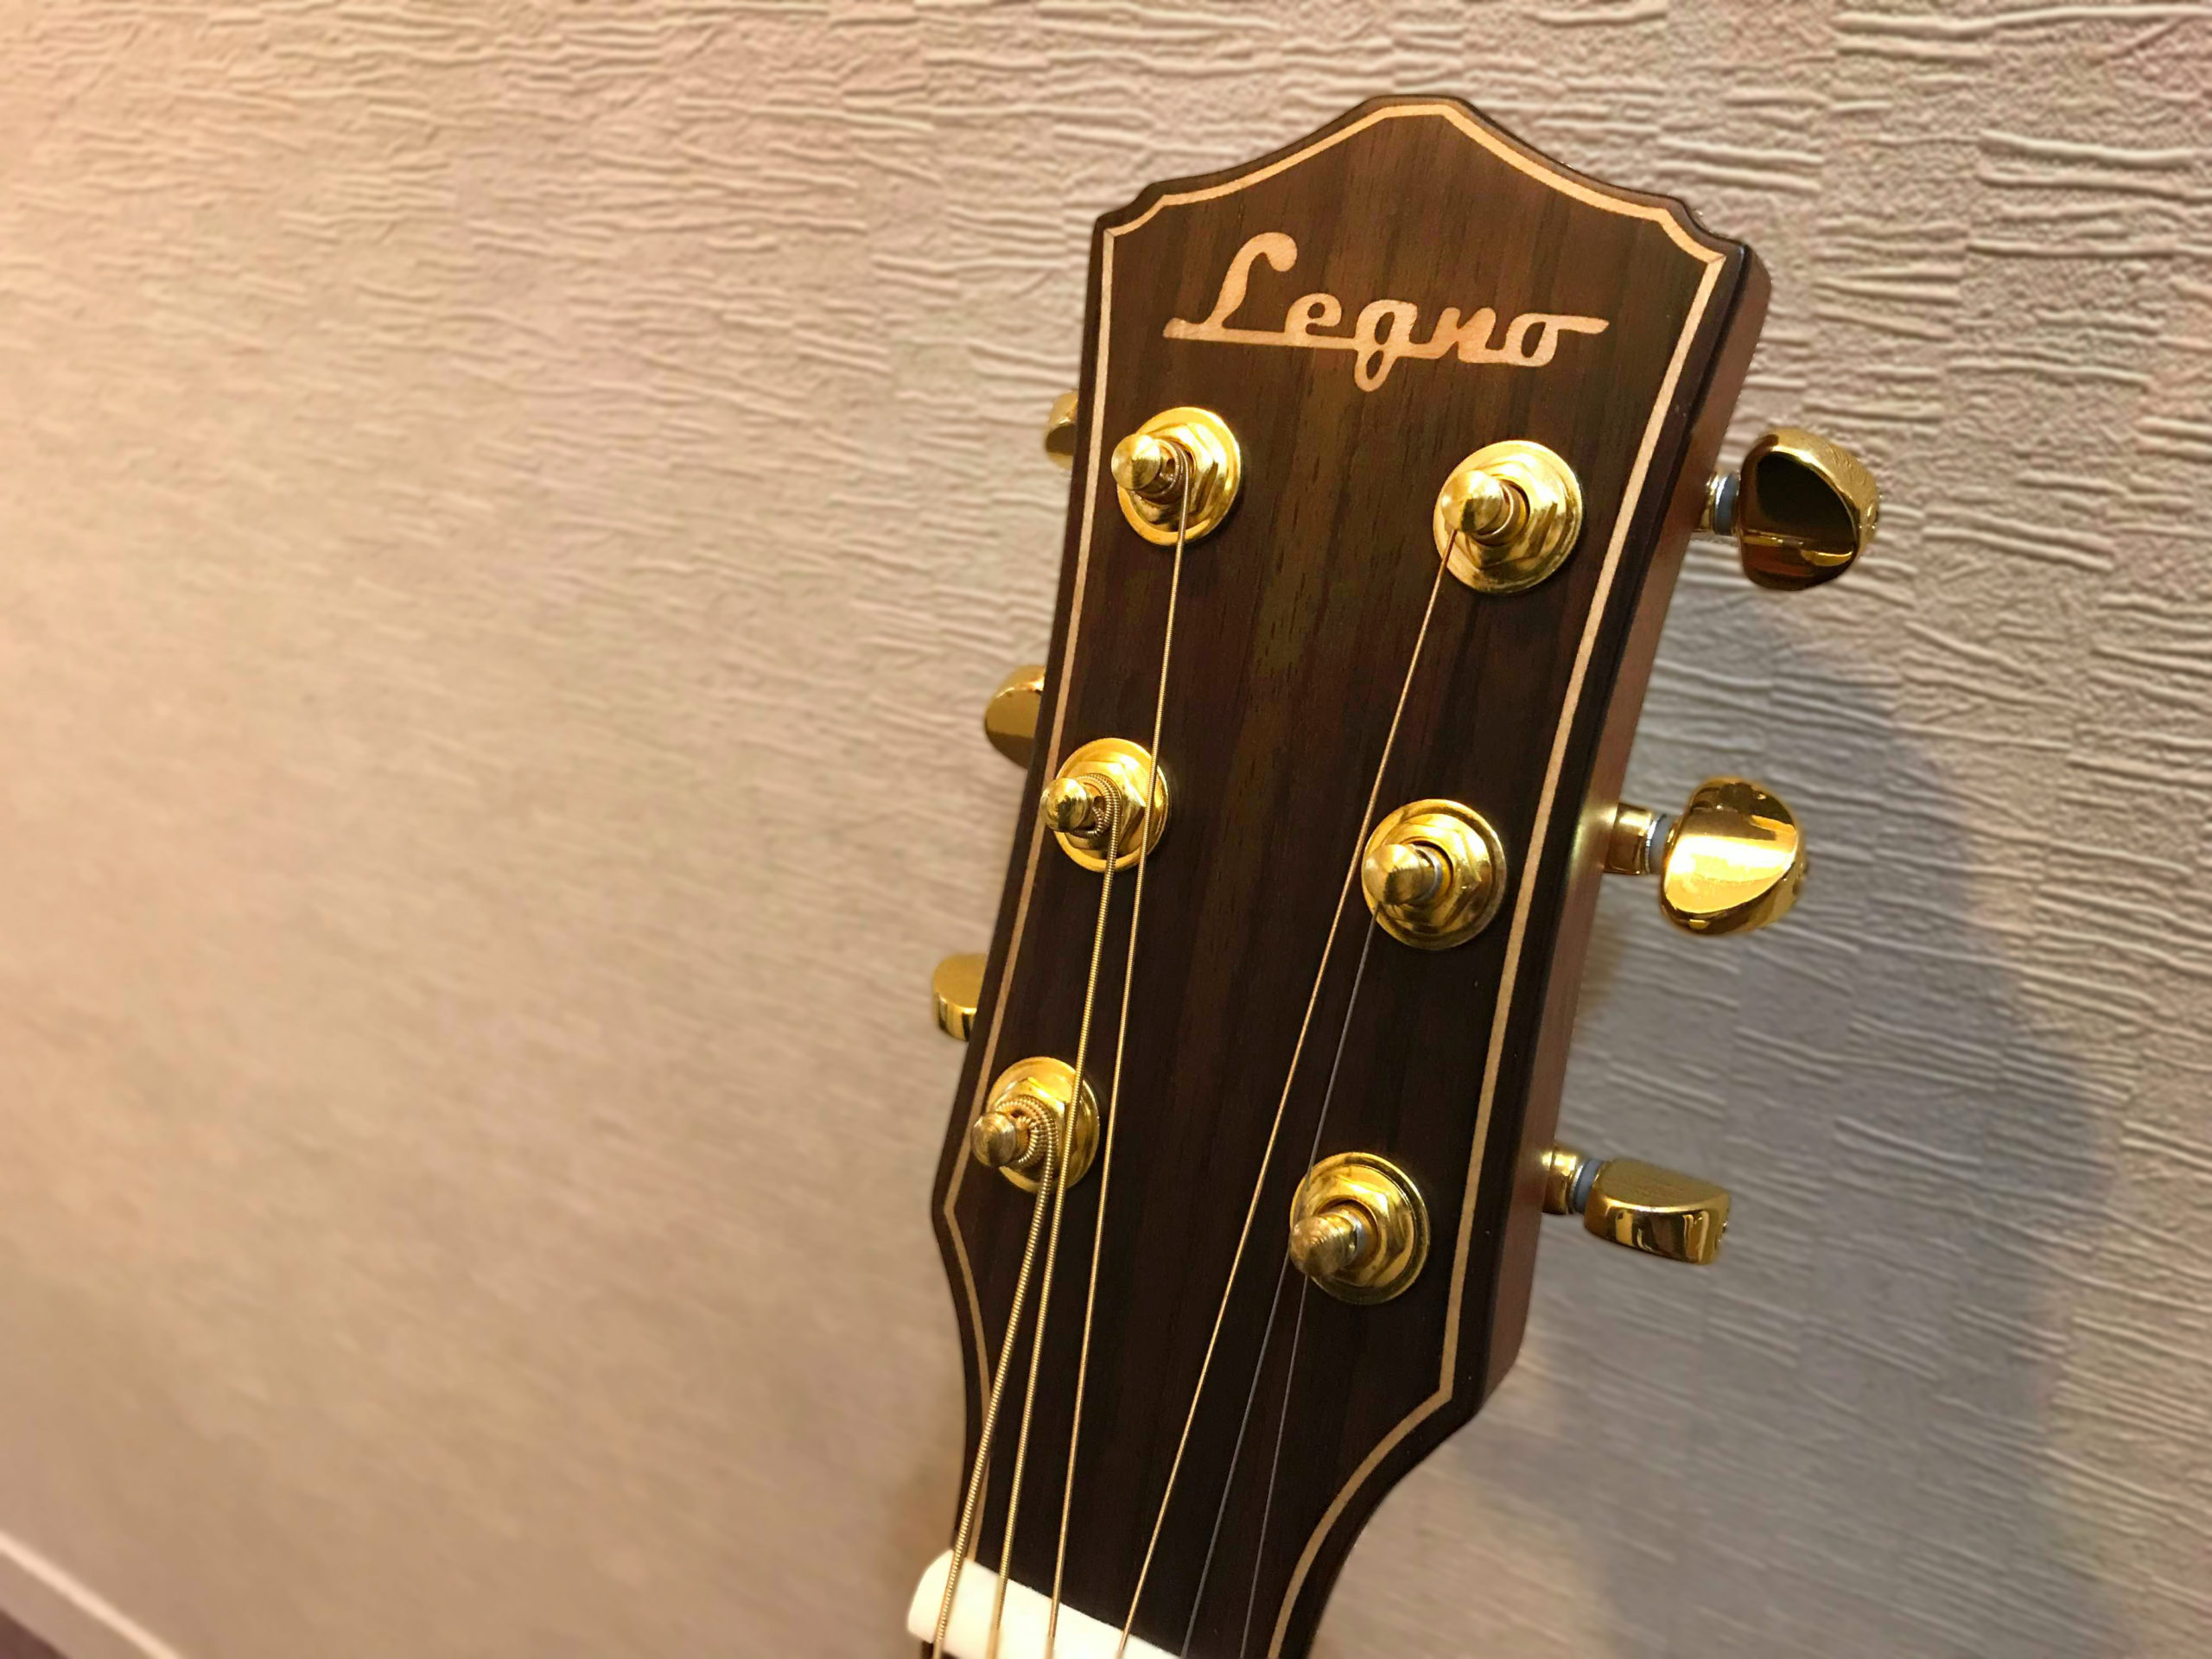 Legno M1 面單板38吋旅行吉他